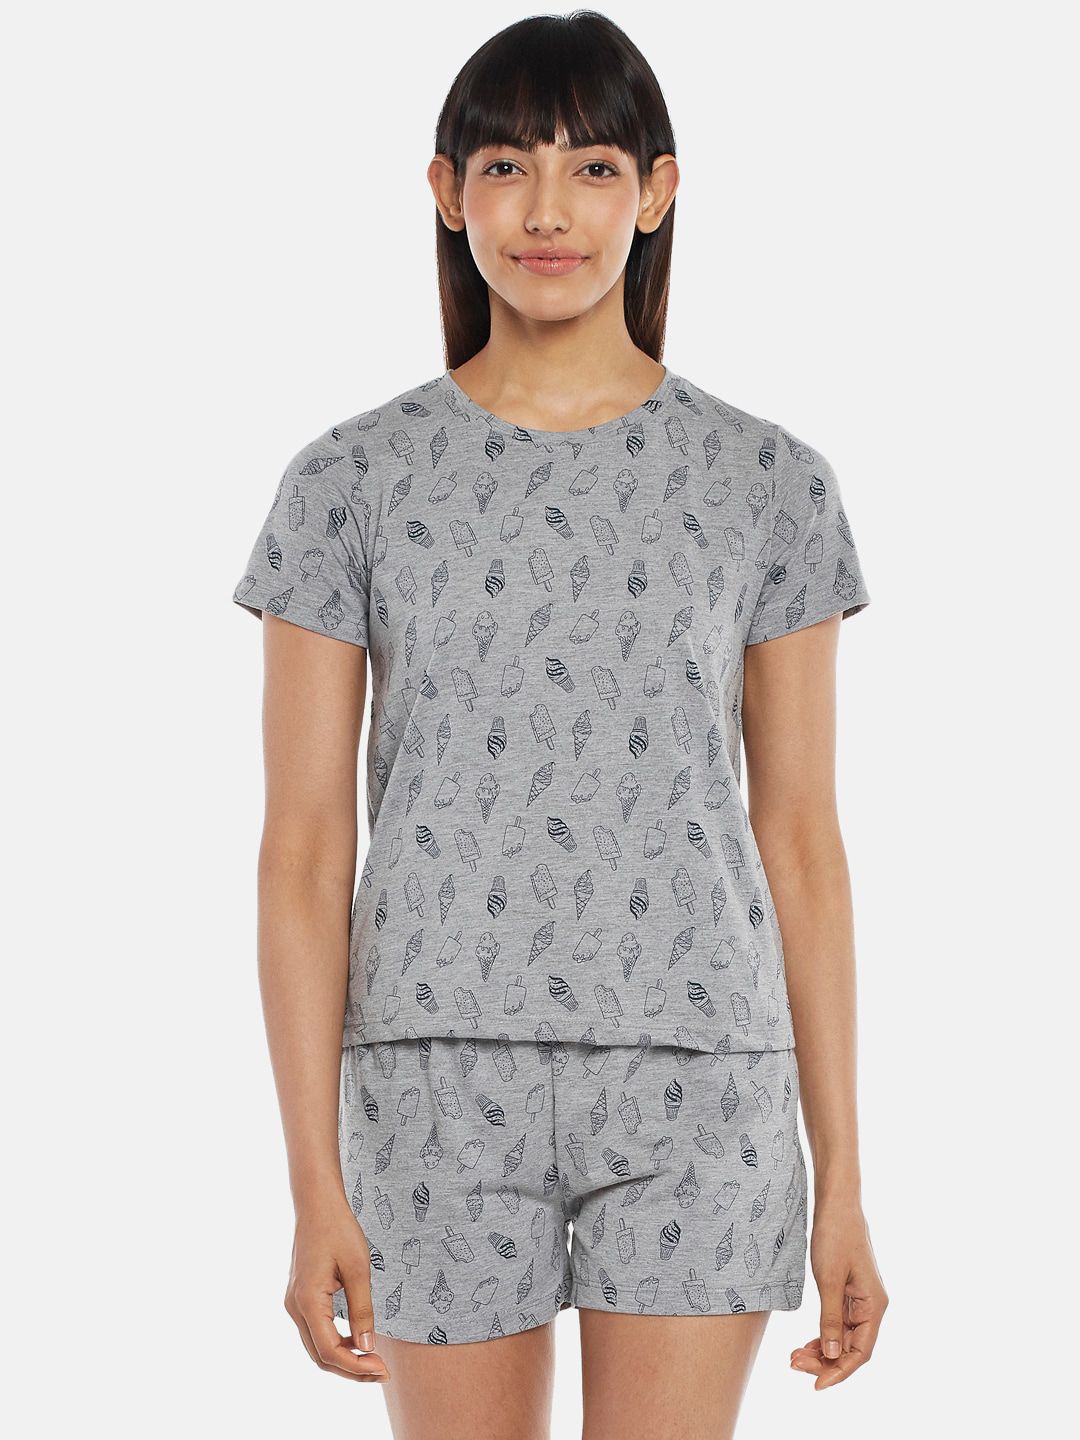 Dreamz by Pantaloons Women Grey Melange Printed Night suit Price in India